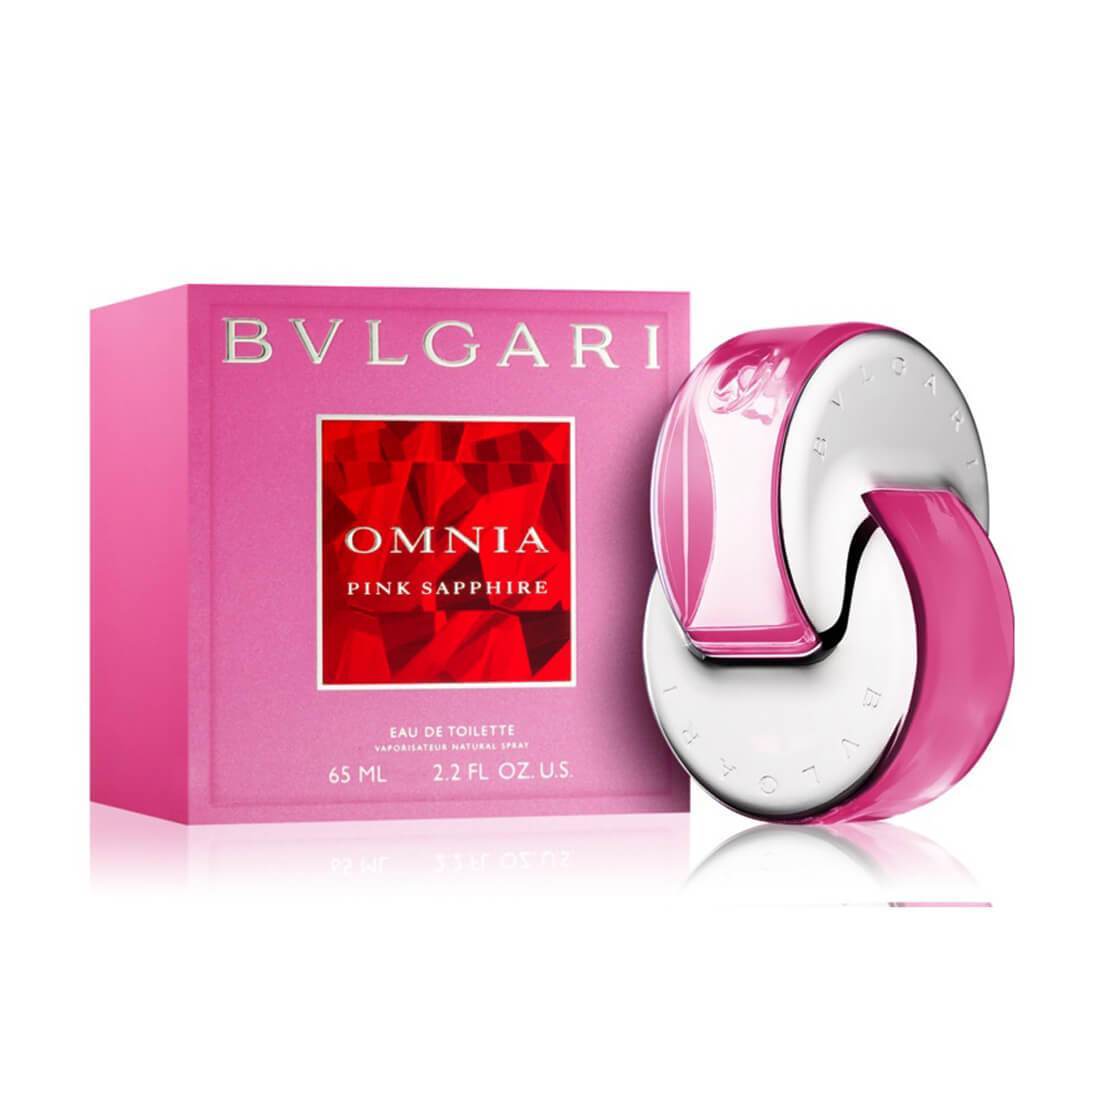 bvlgari omnia pink sapphire perfume review